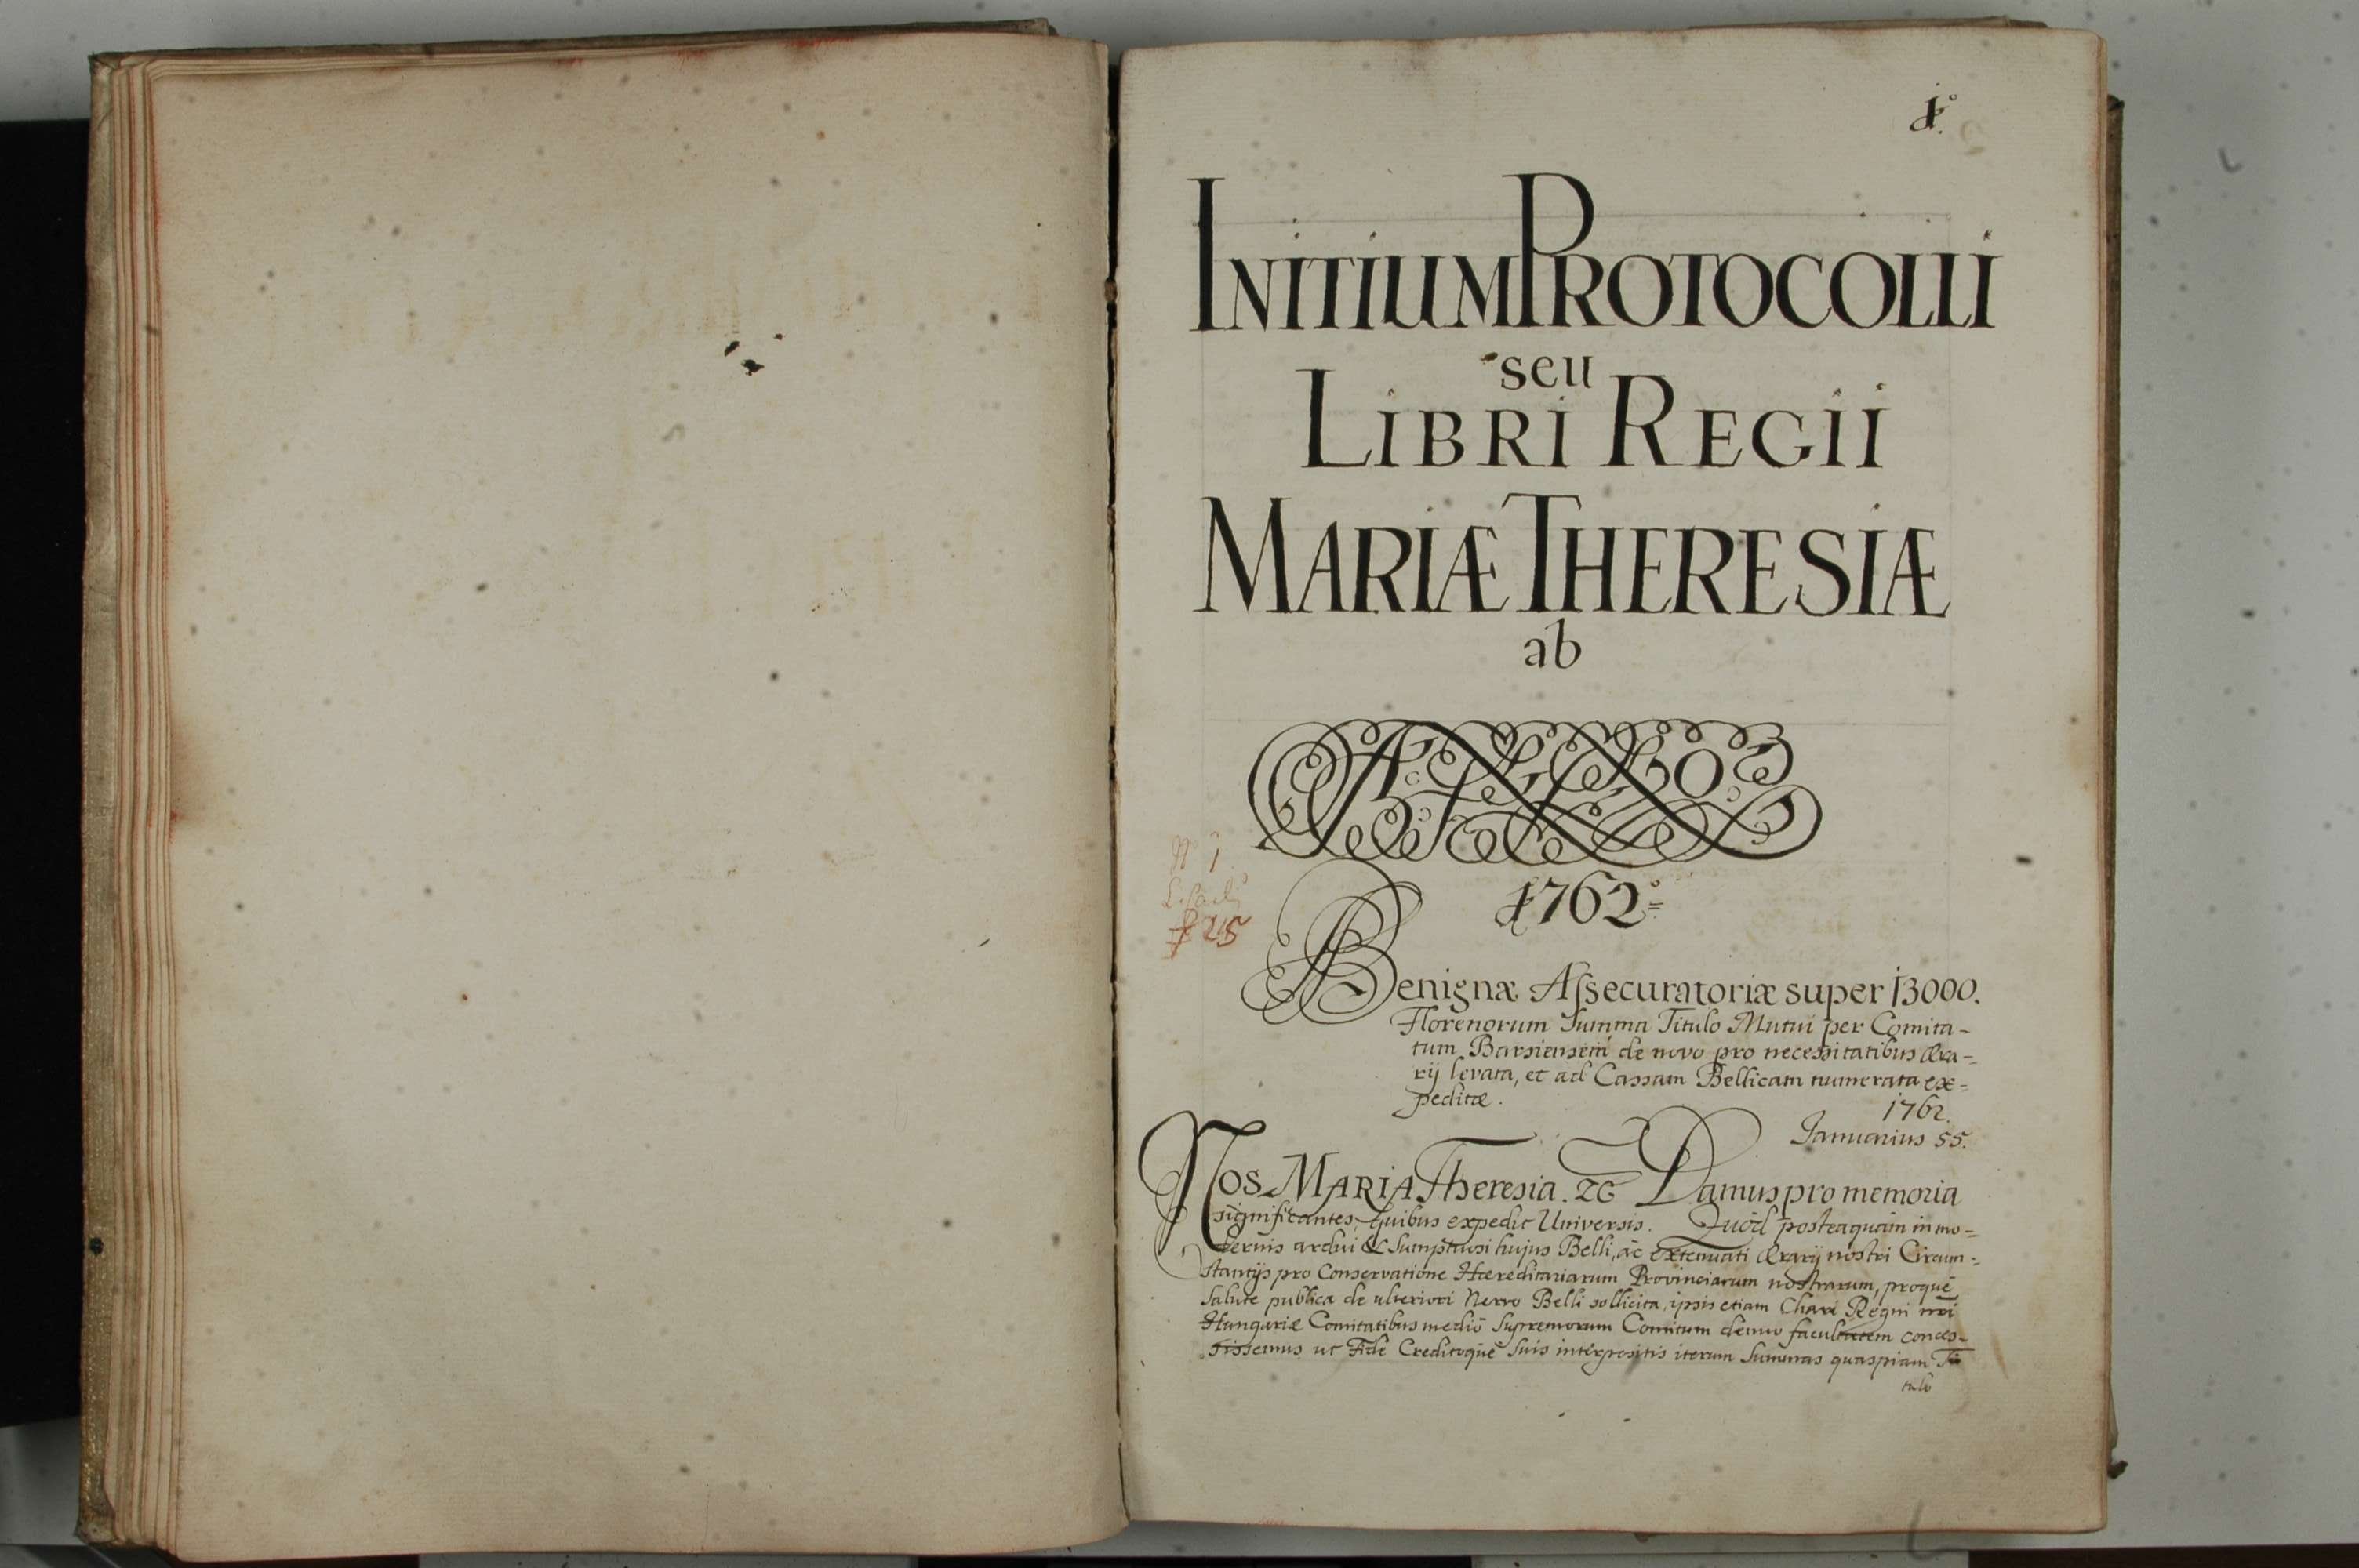 Magyar Nemzeti Levéltár , Libri Regii (1763), front page - HU MNL OL W1 A57 Volume 46